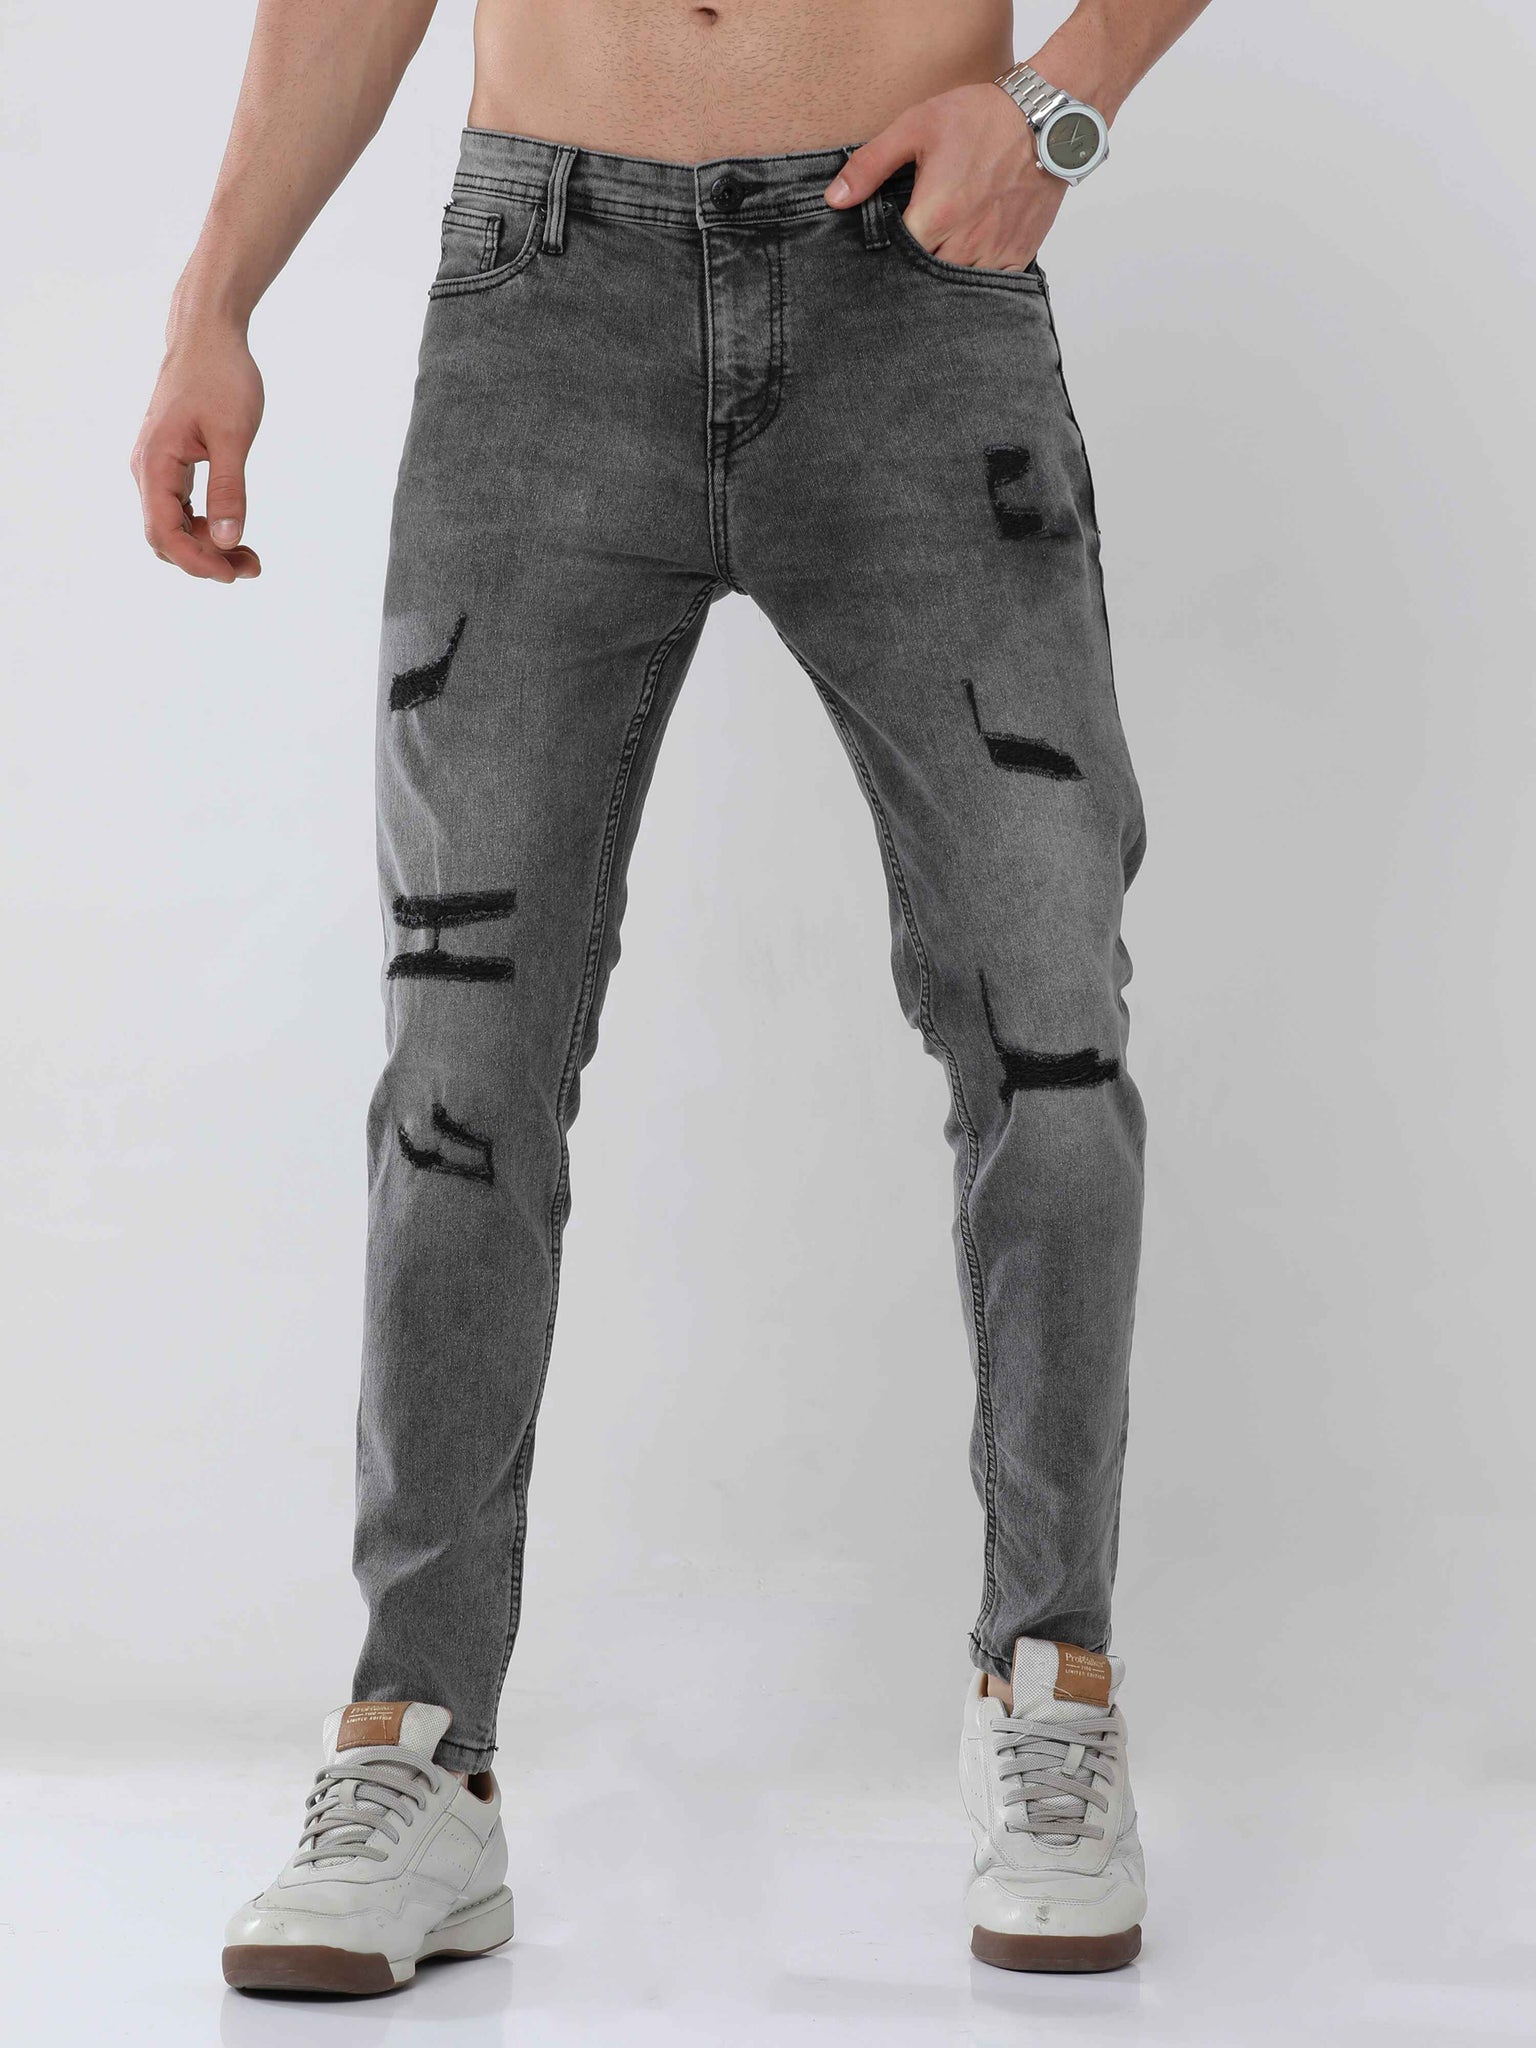 Pebble Gray Jeans